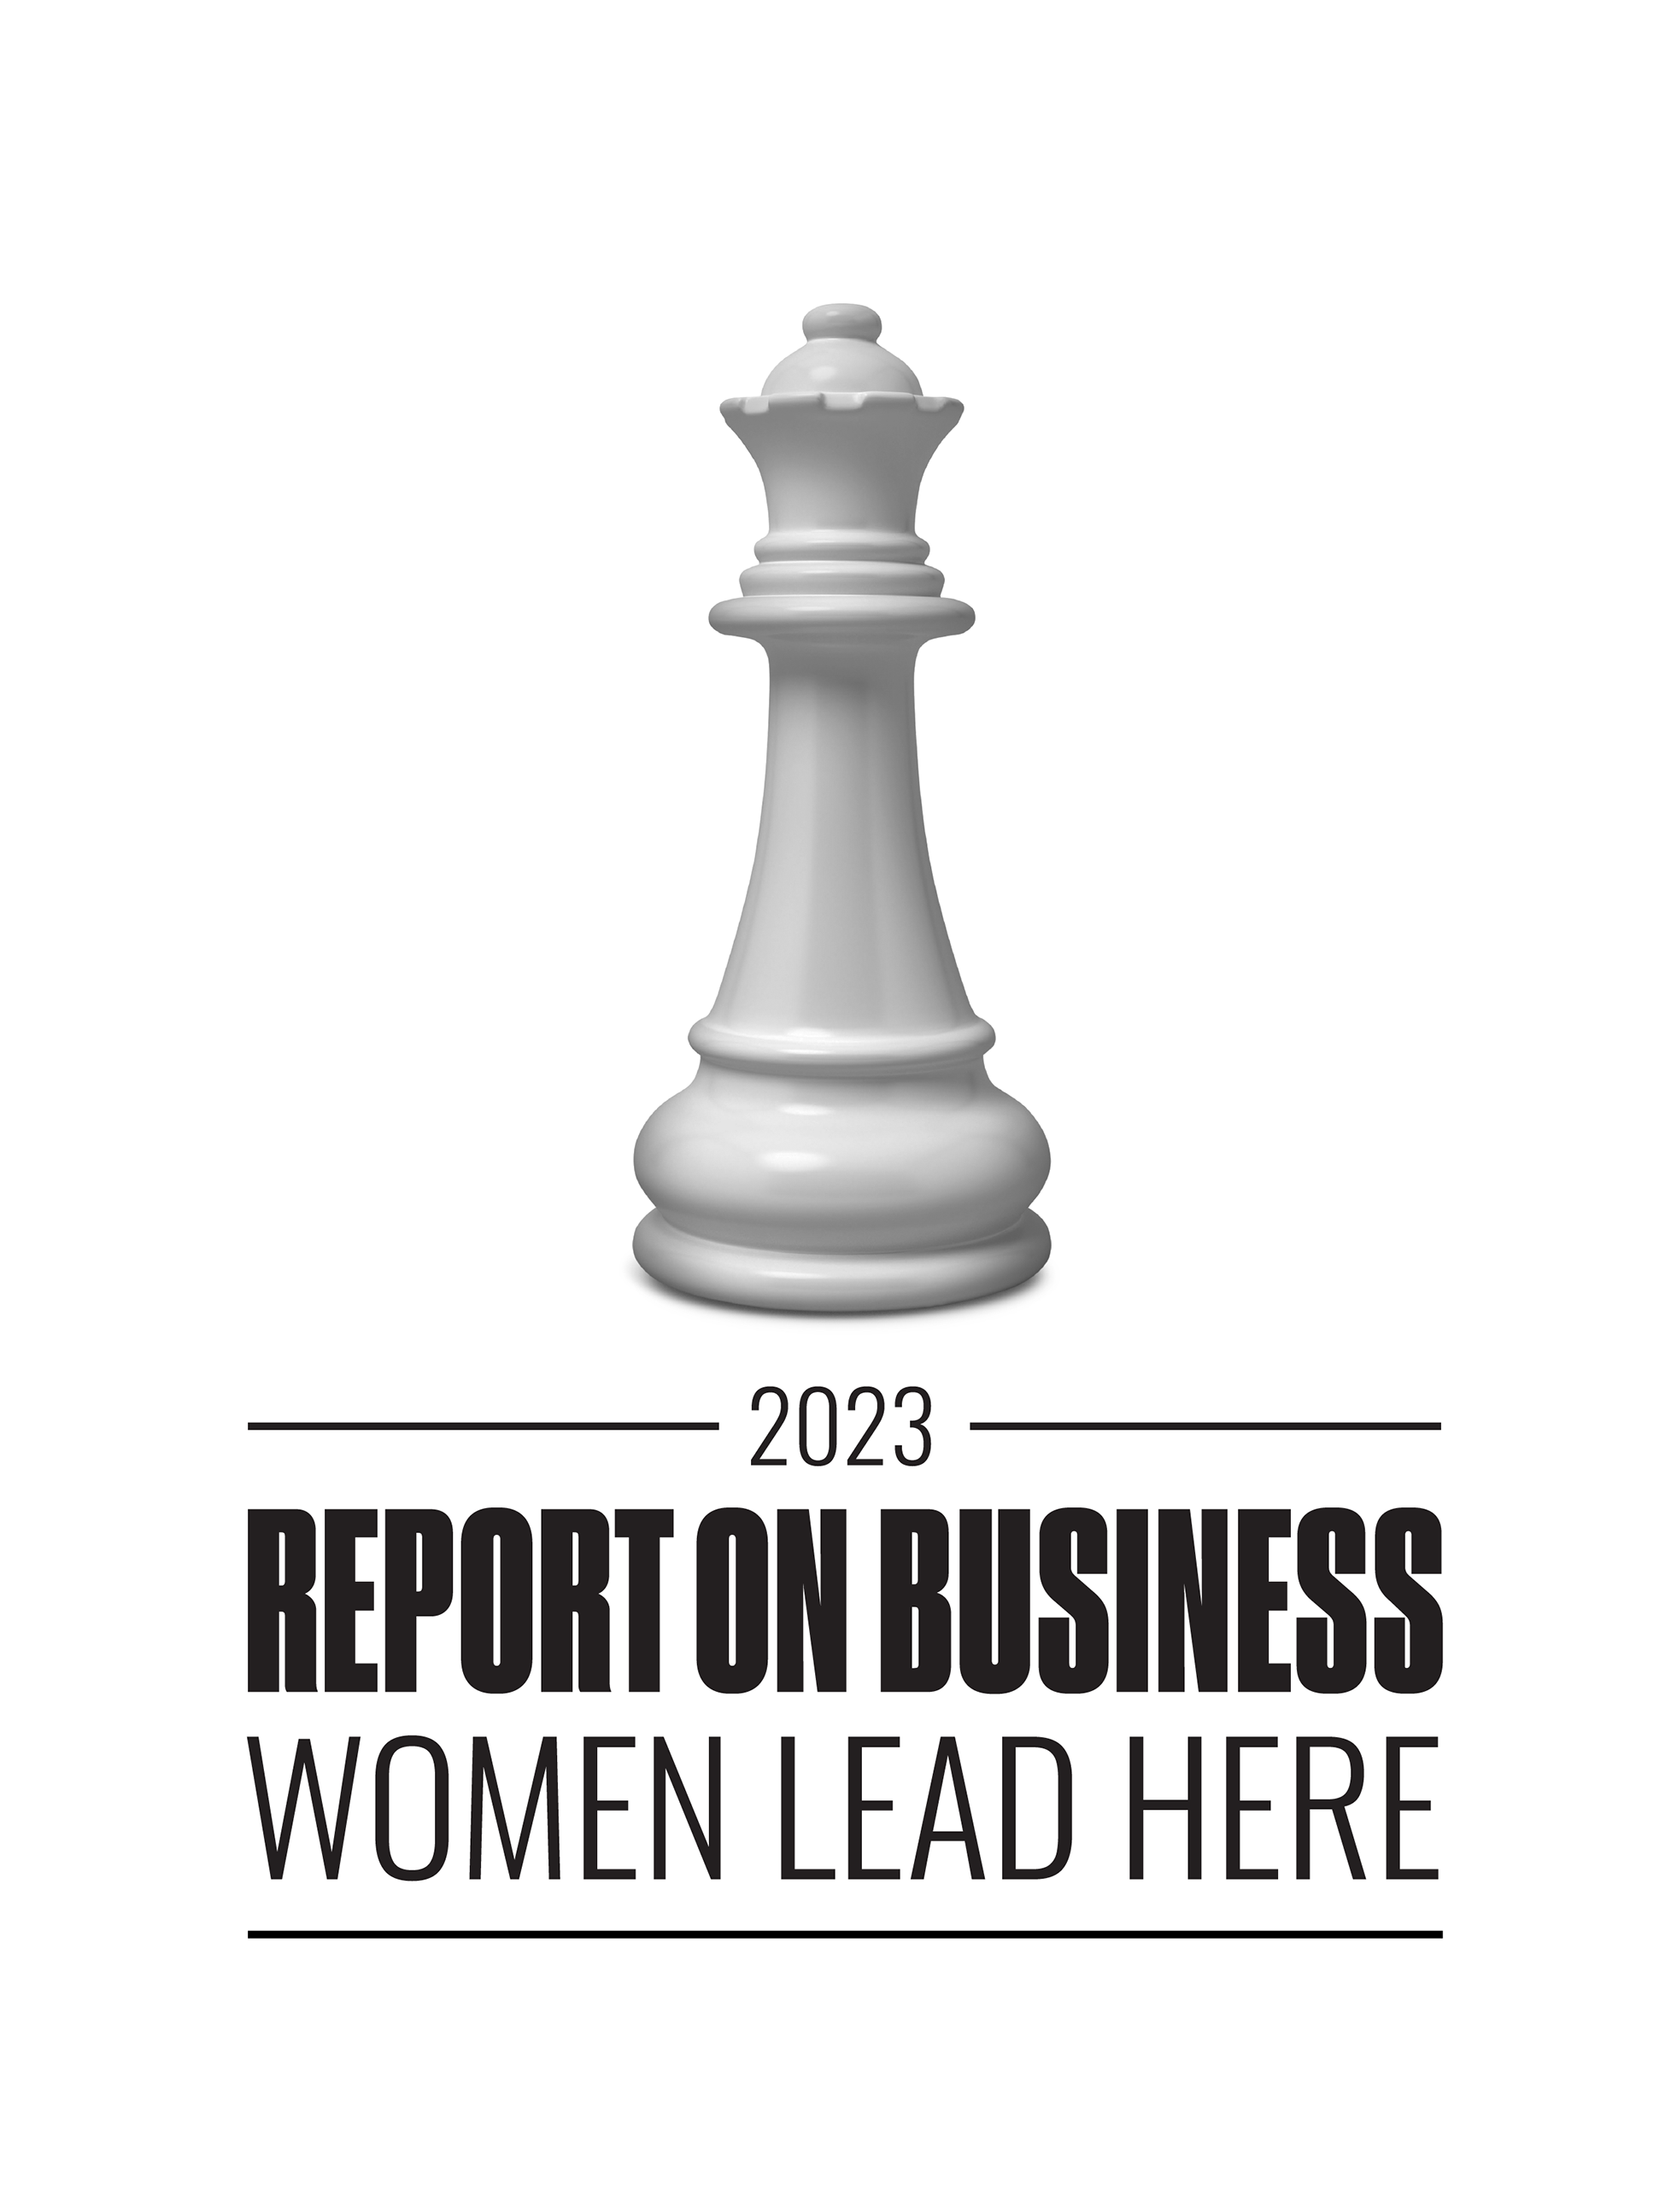 Women Lead Here image